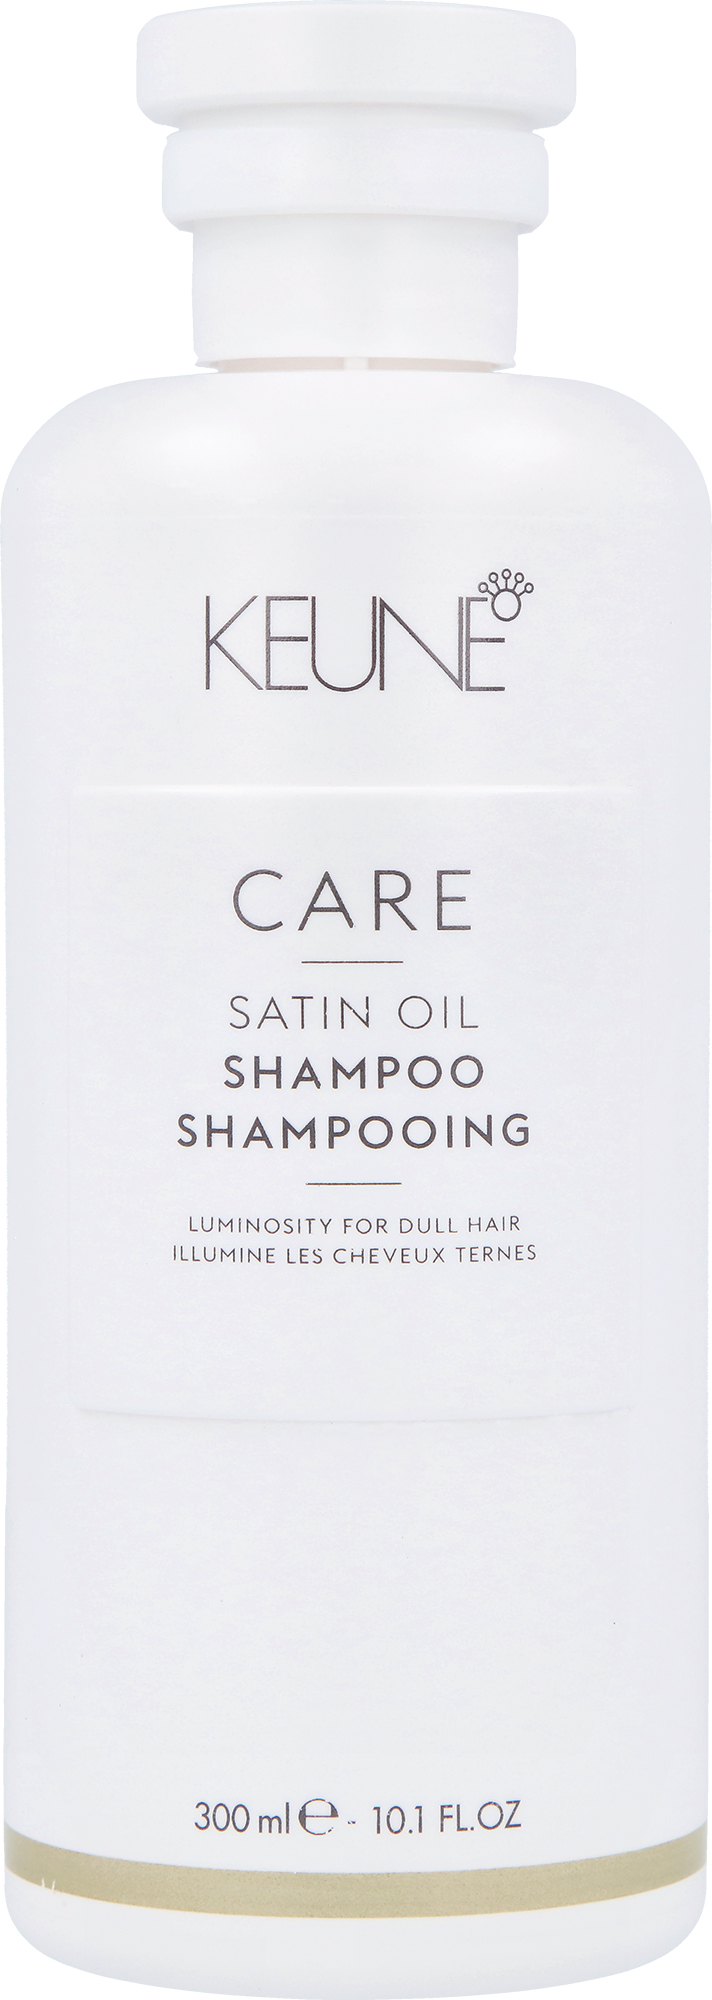 Keune Care Satin Oil Shampoo 300 ml 